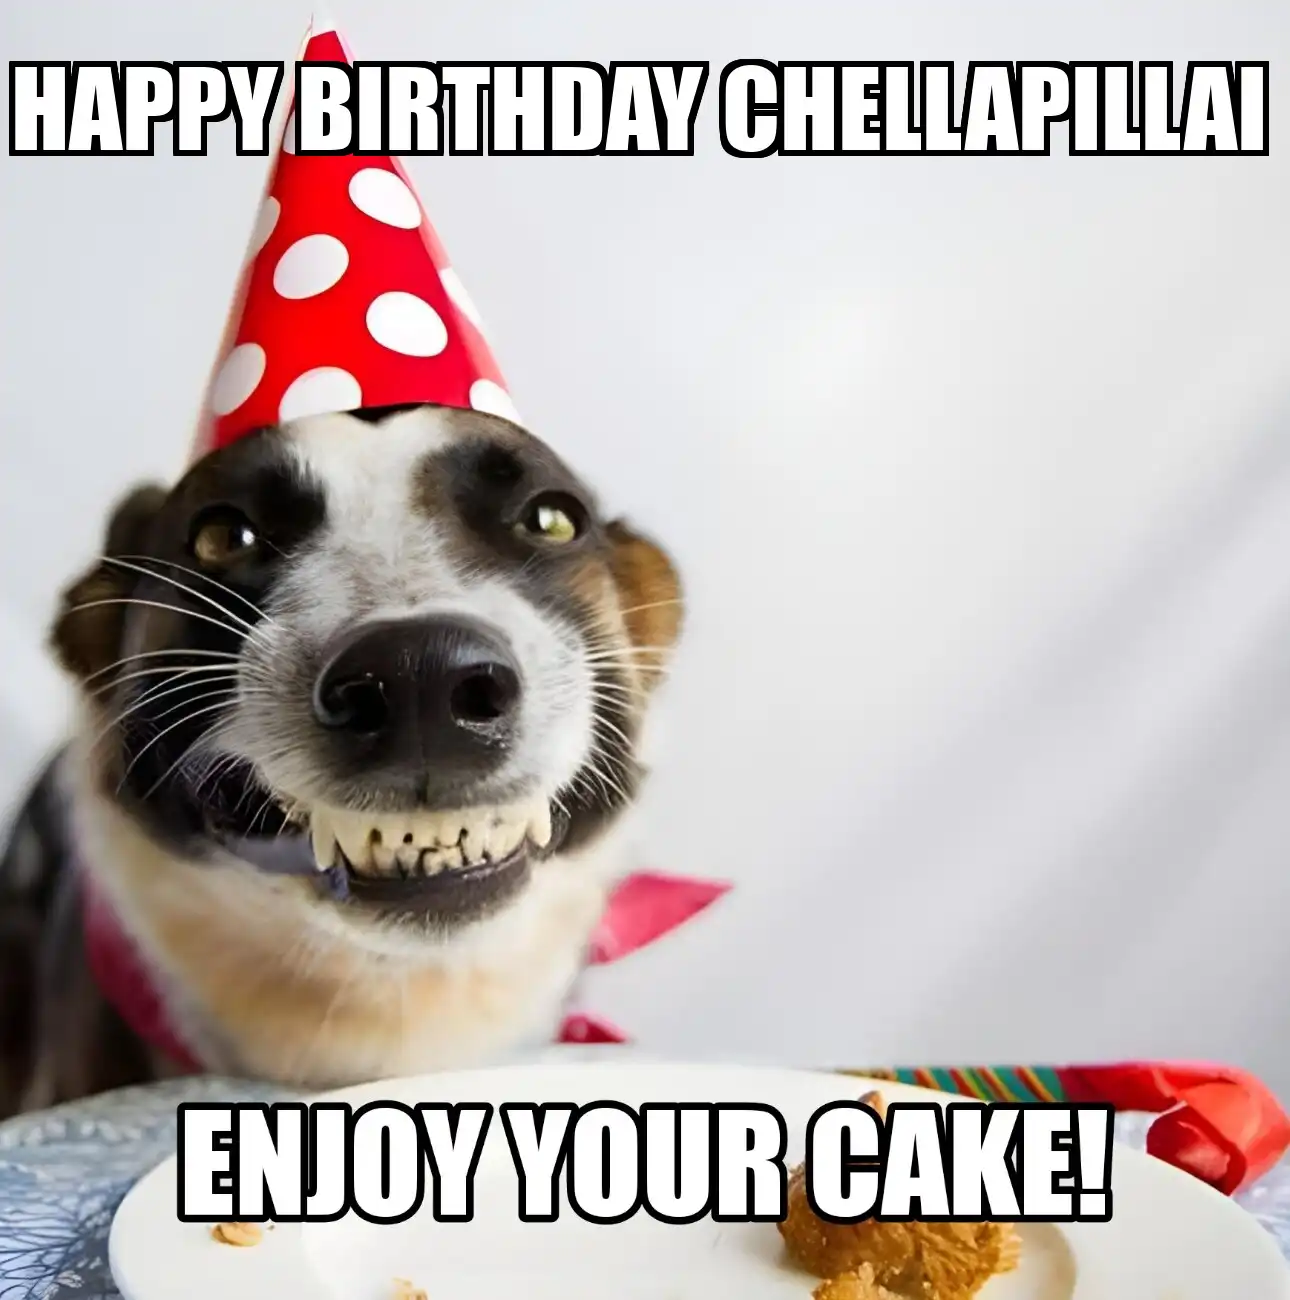 Happy Birthday Chellapillai Enjoy Your Cake Dog Meme